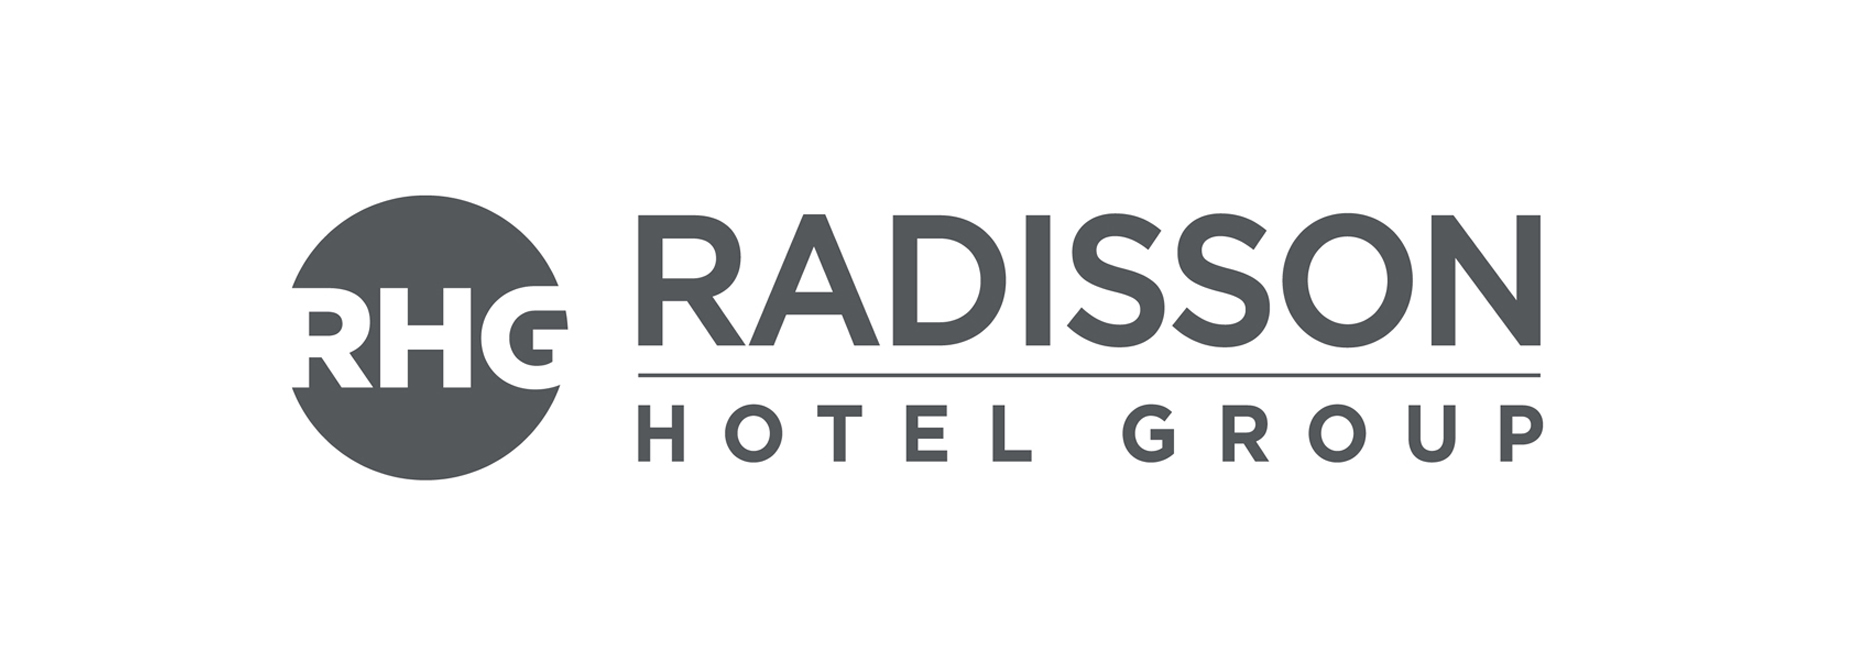 radisson hotel group lp